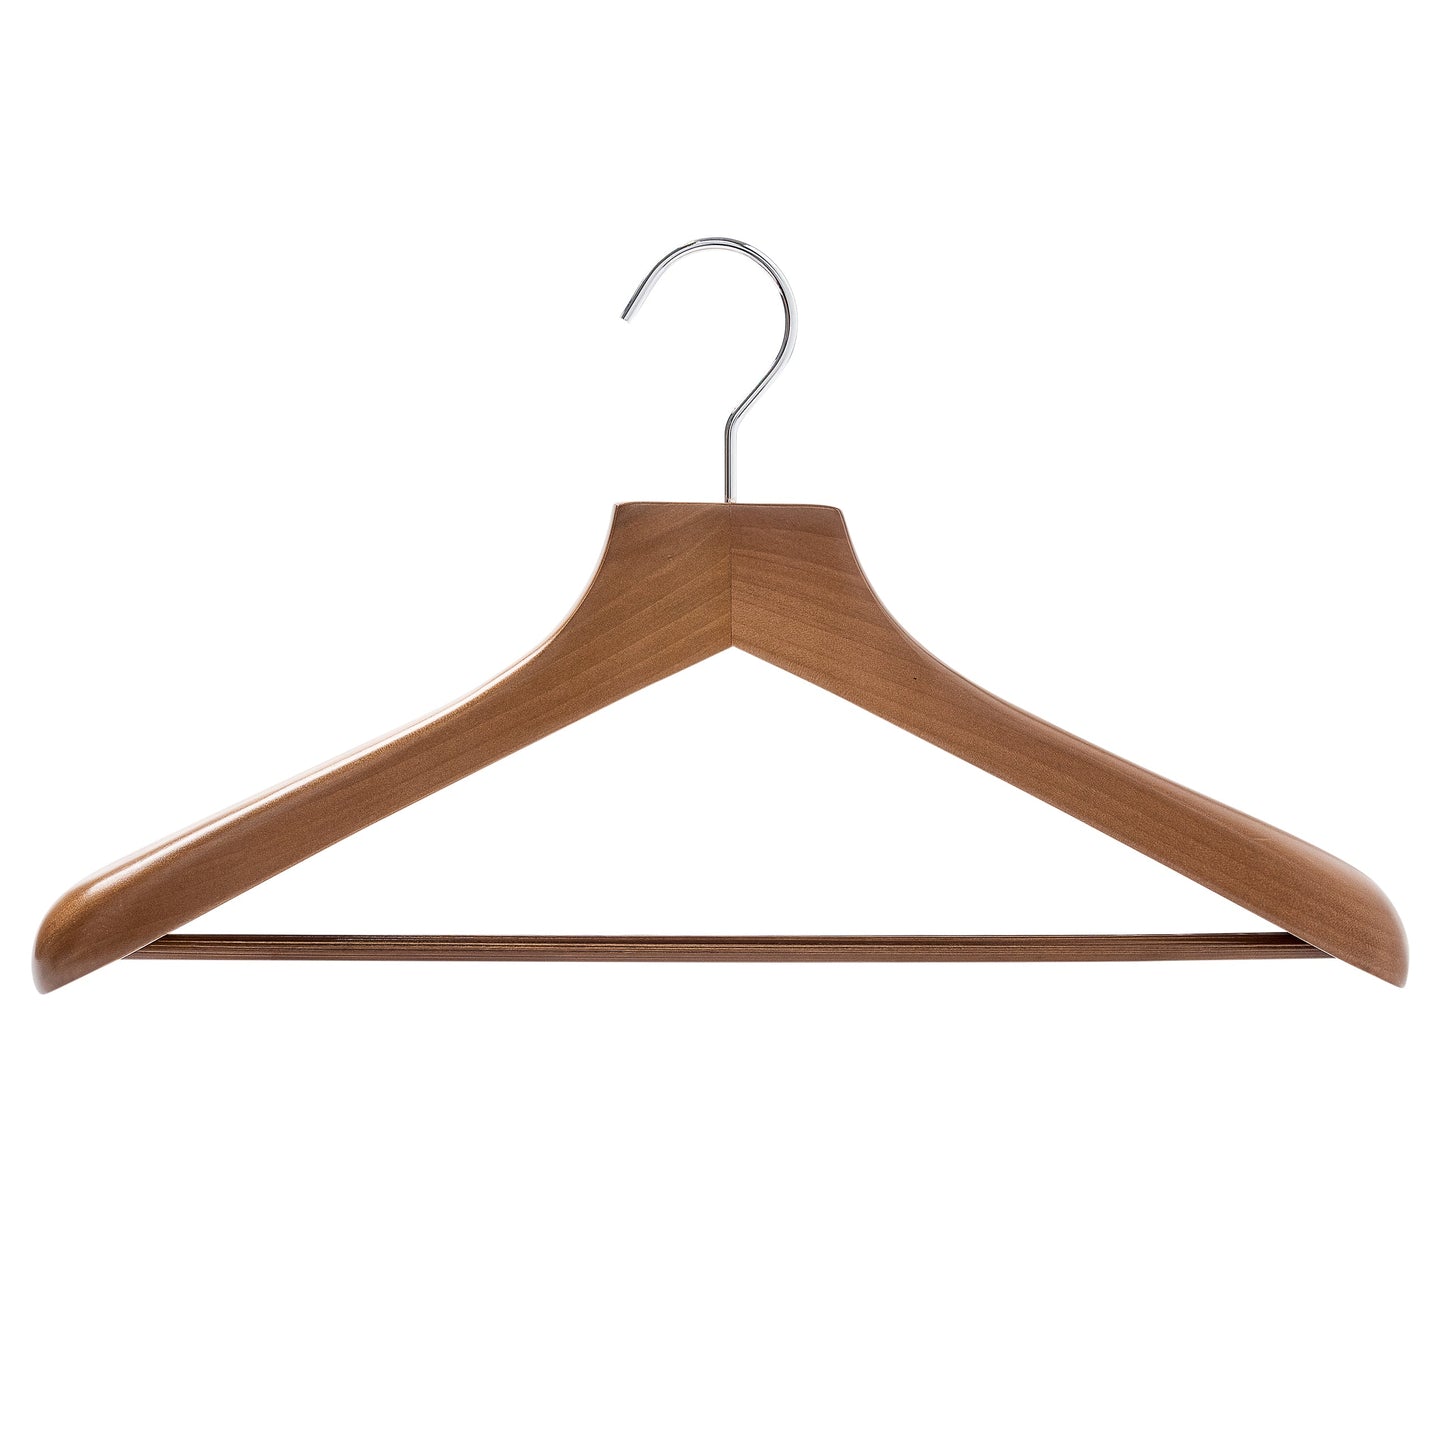 46cm Premium Walnut Wooden Suit Hanger With Bar 50mm Thick Shoulders Sold 5/10/20 - Rackshop Australia